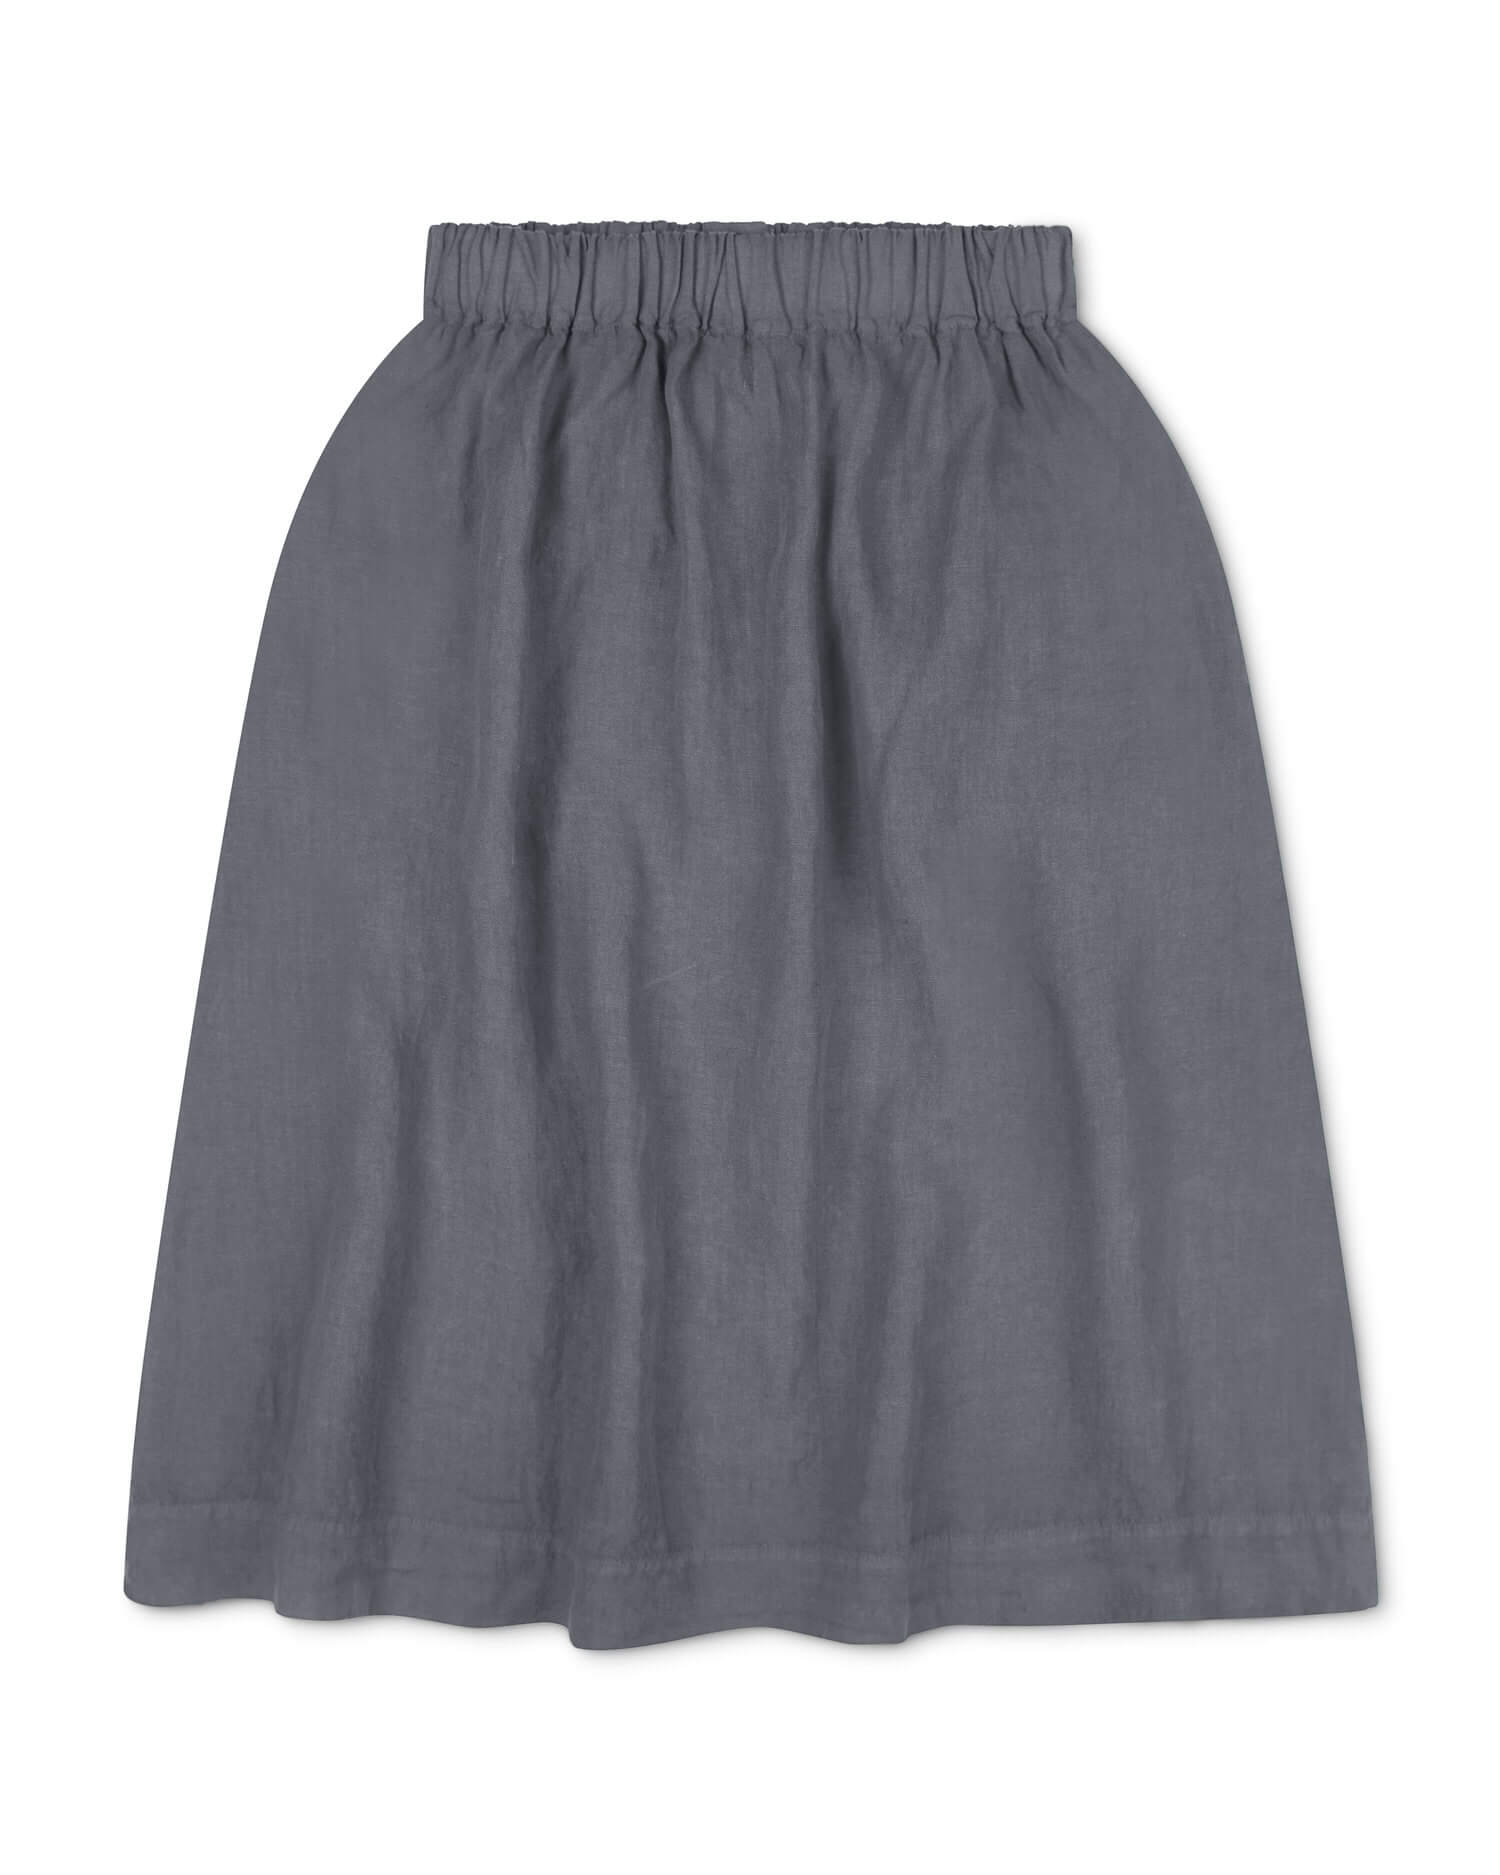 Blue linen midi skirt from Matona